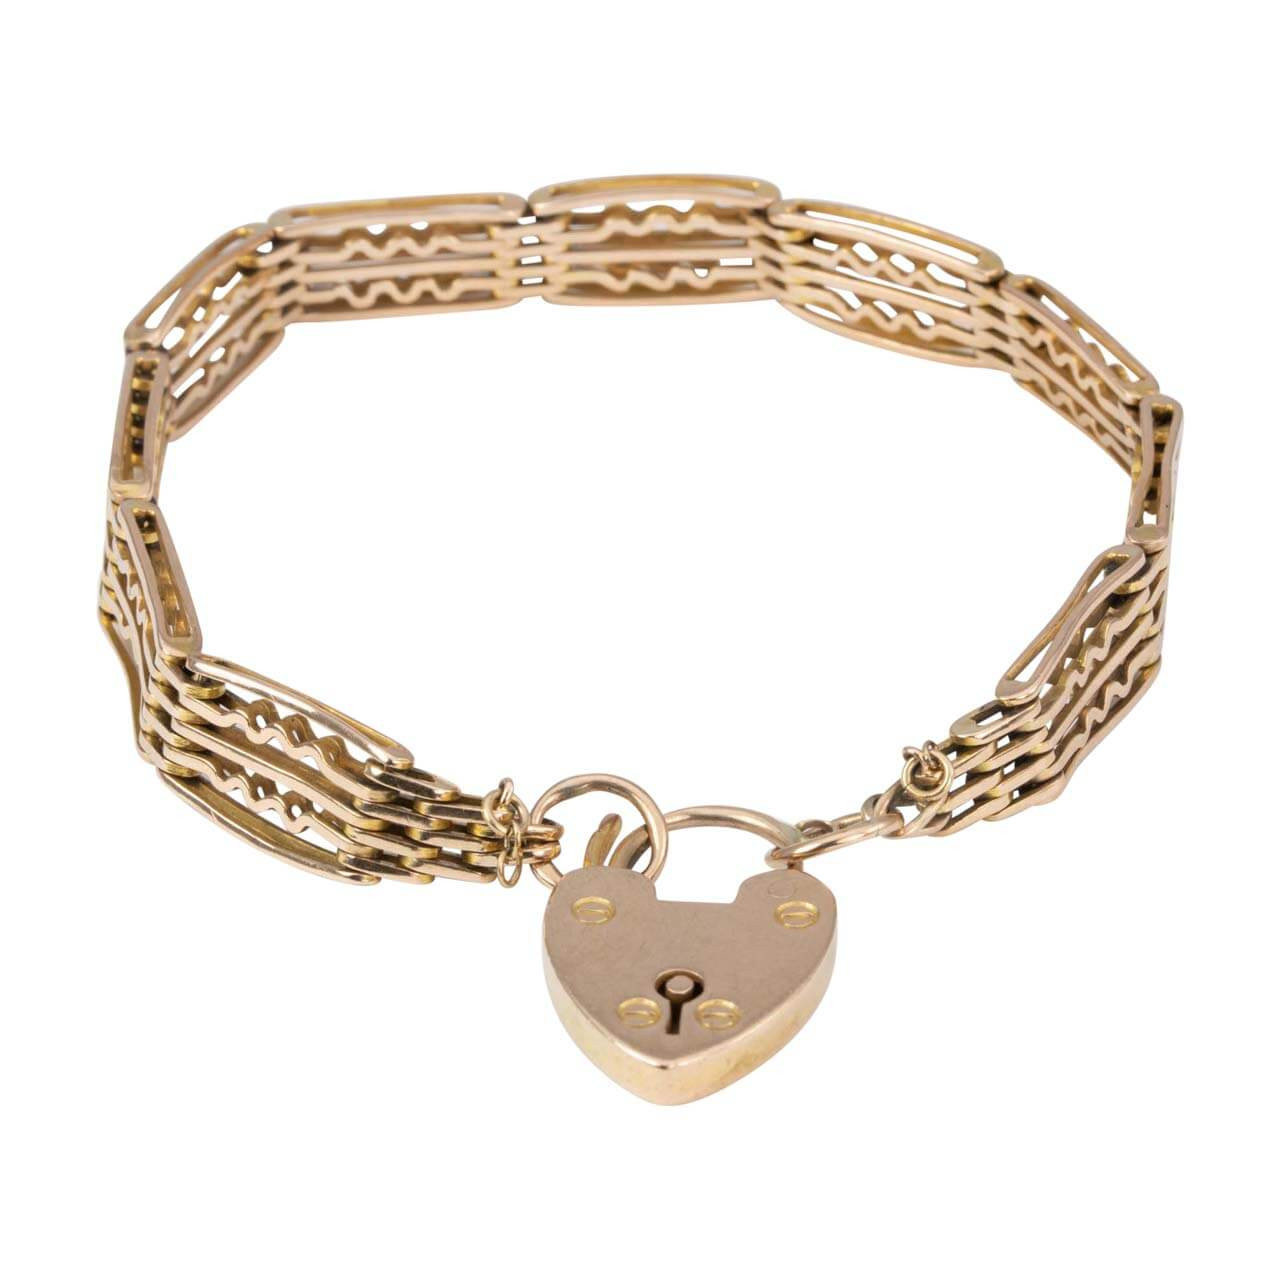 Buy NILUS Vintage Rose Flower Charms Bracelet Trendy Womens Wear Link   Chain Bracelet Jewelr Rose Gold at Amazonin